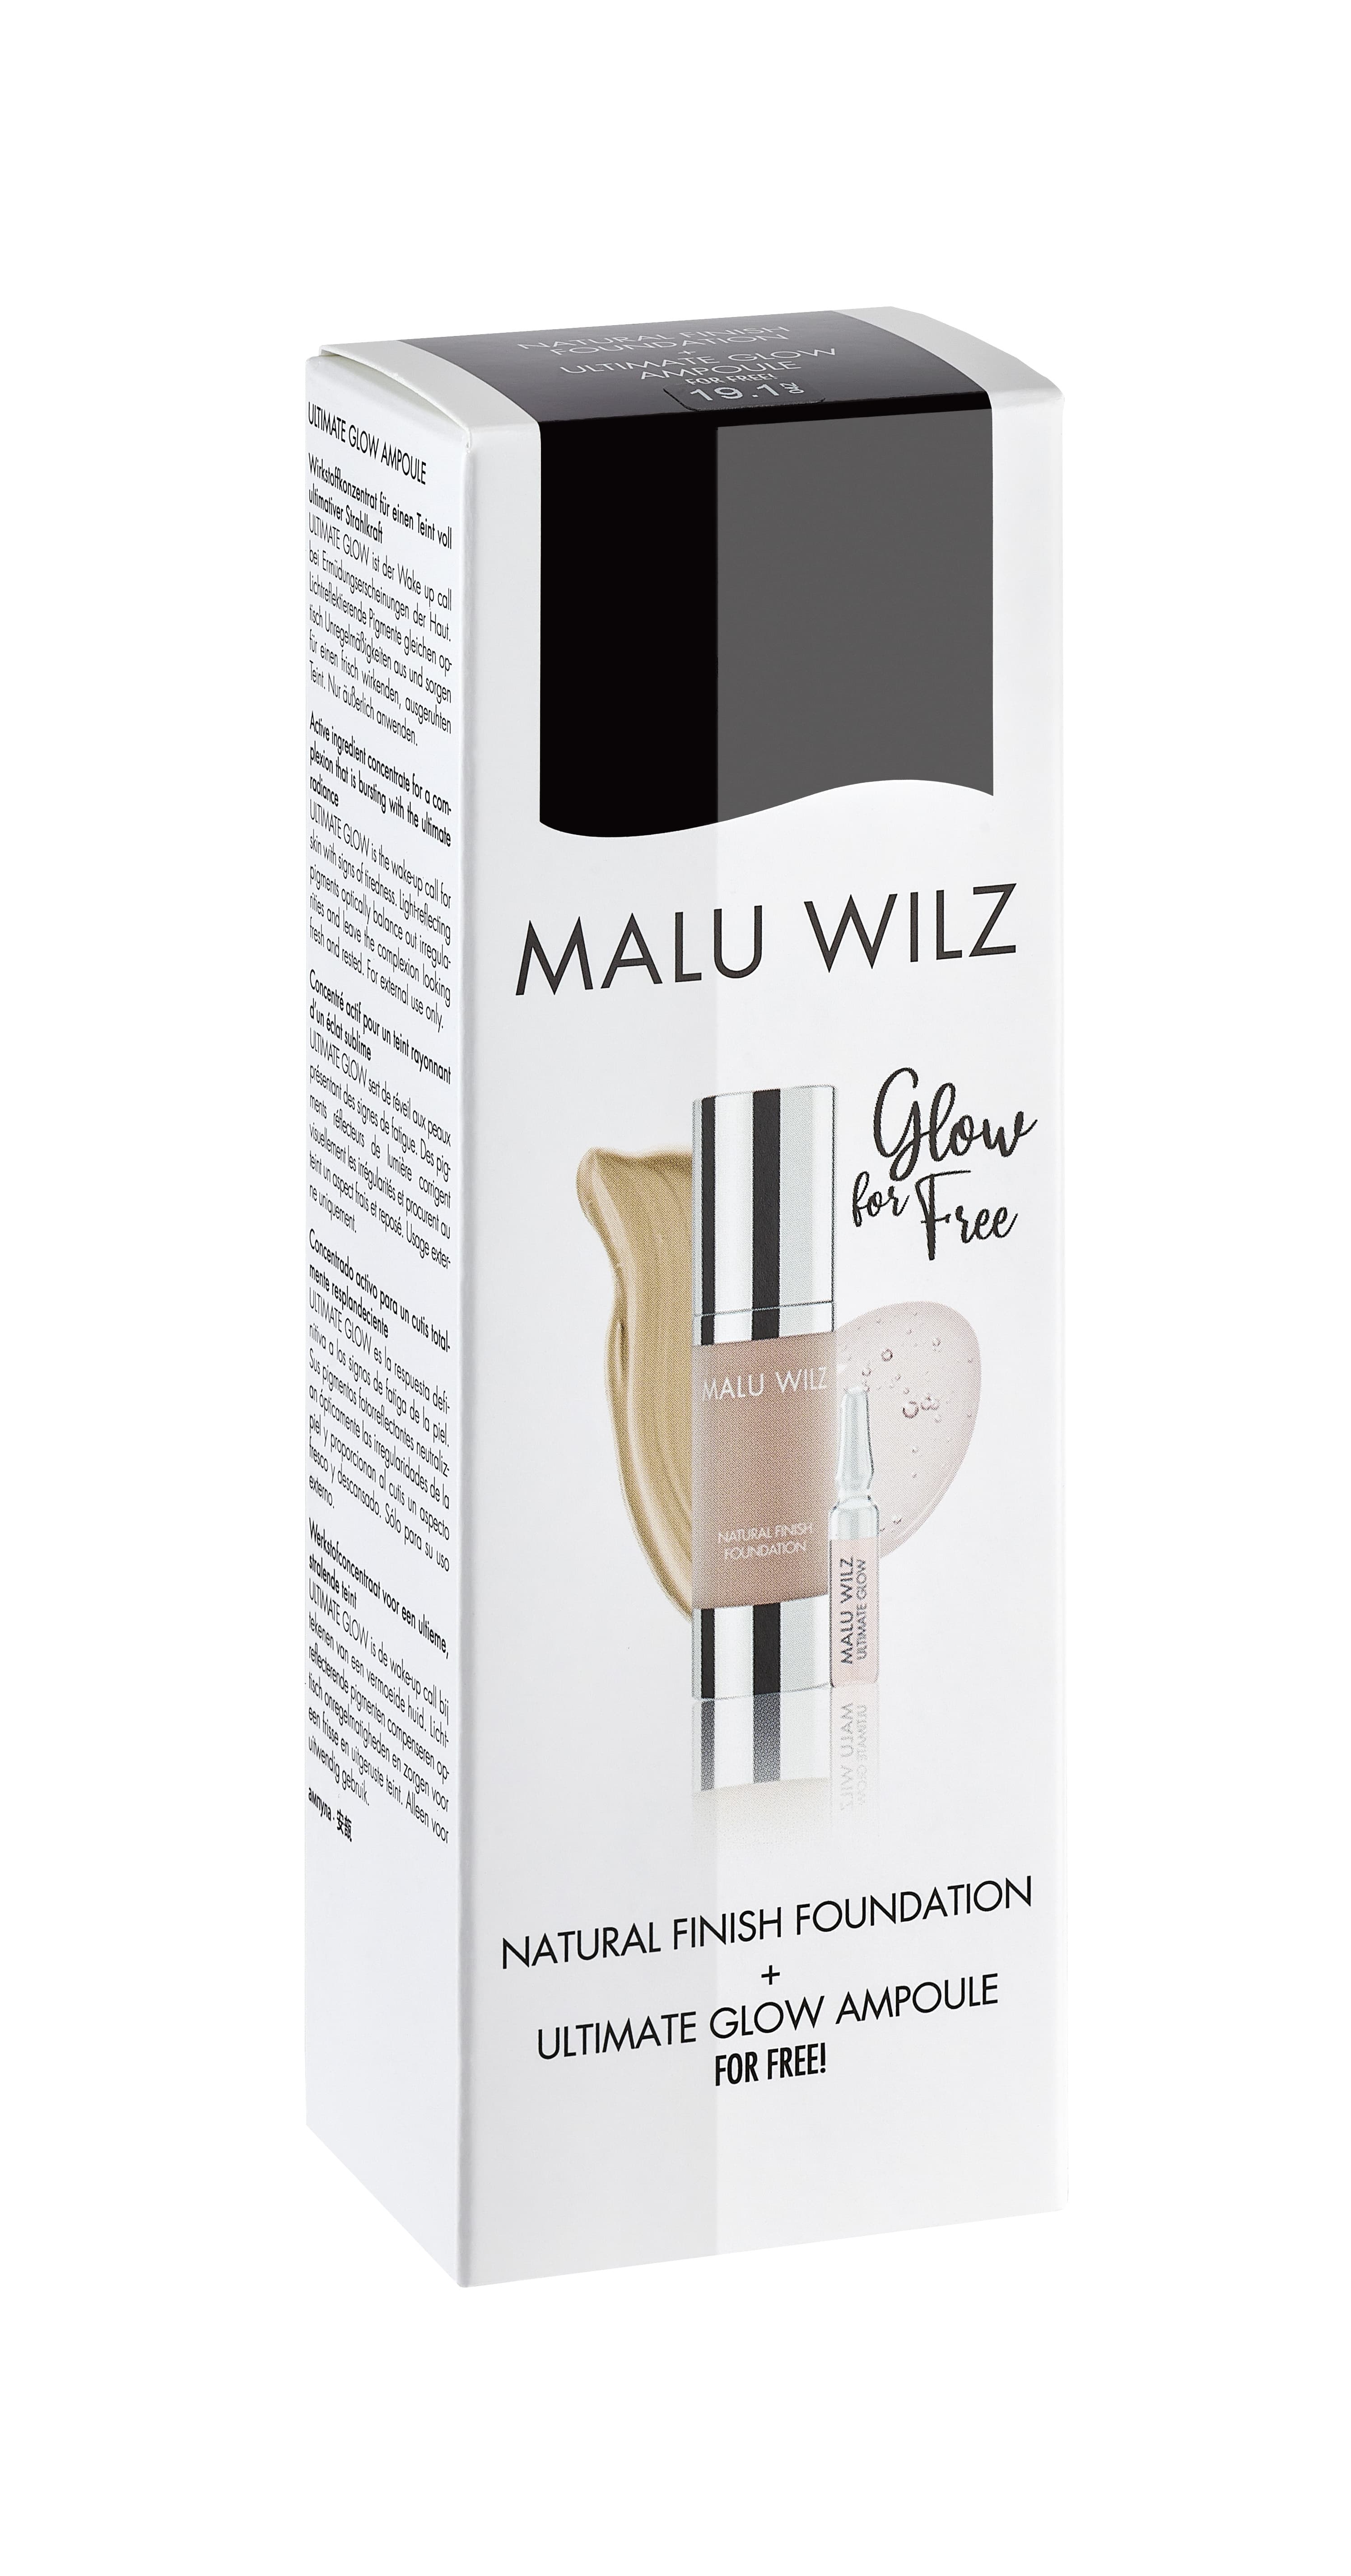 Malu Wilz Natural Finish Foundation 27 glow edition